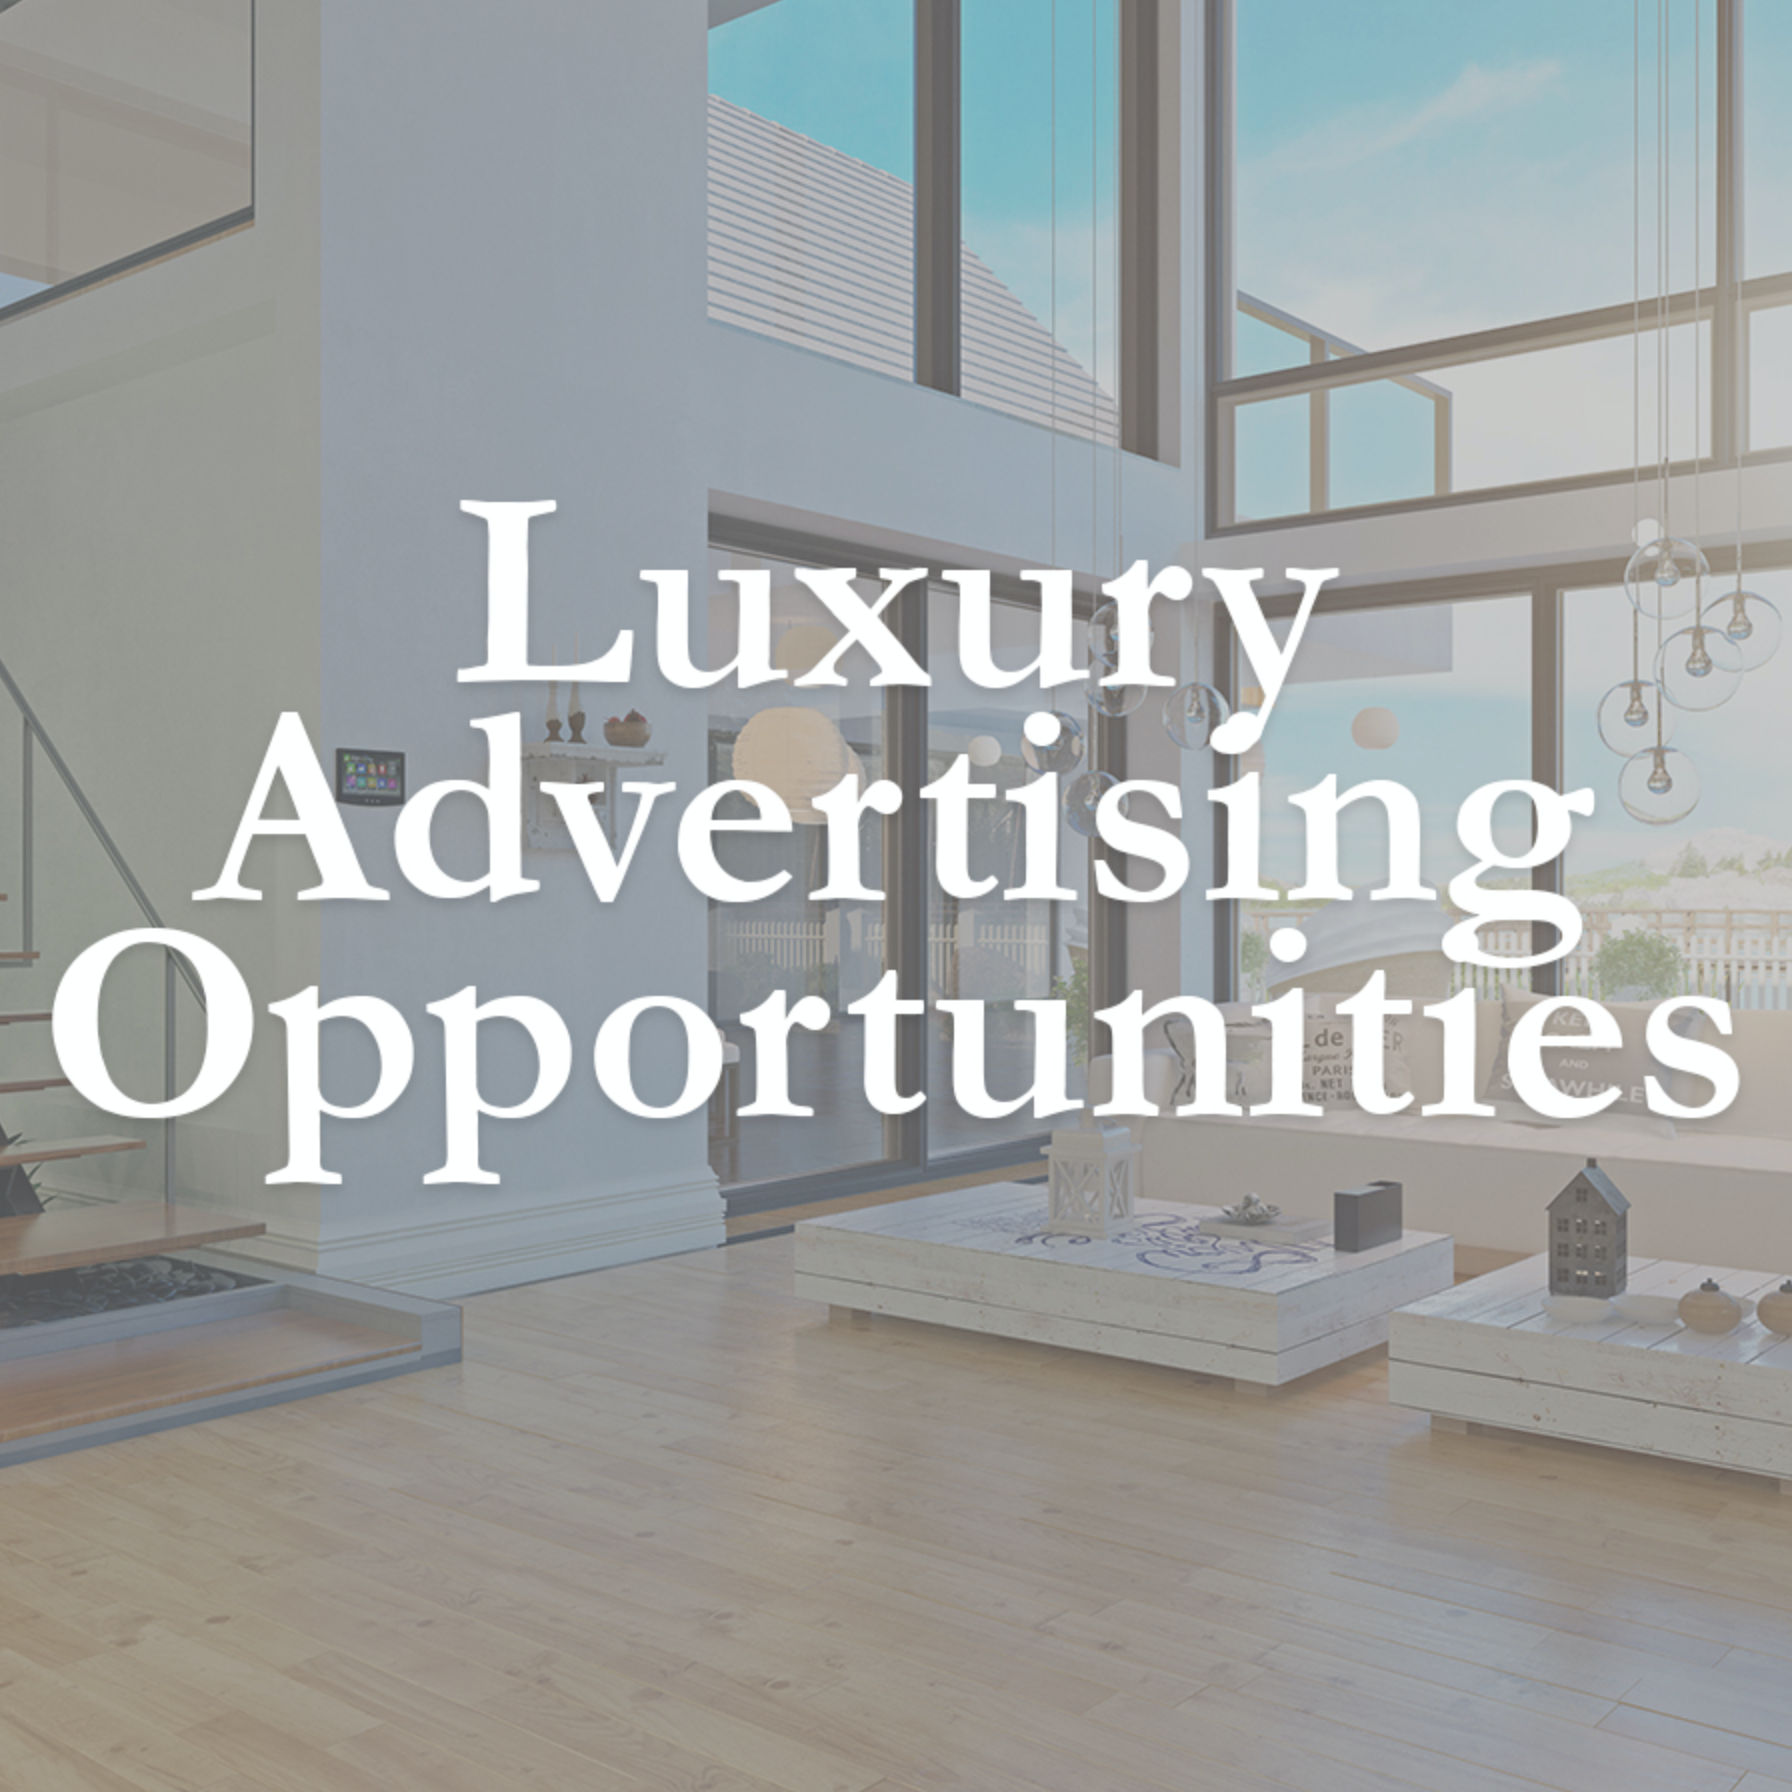 Luxury Advertising Opportunities